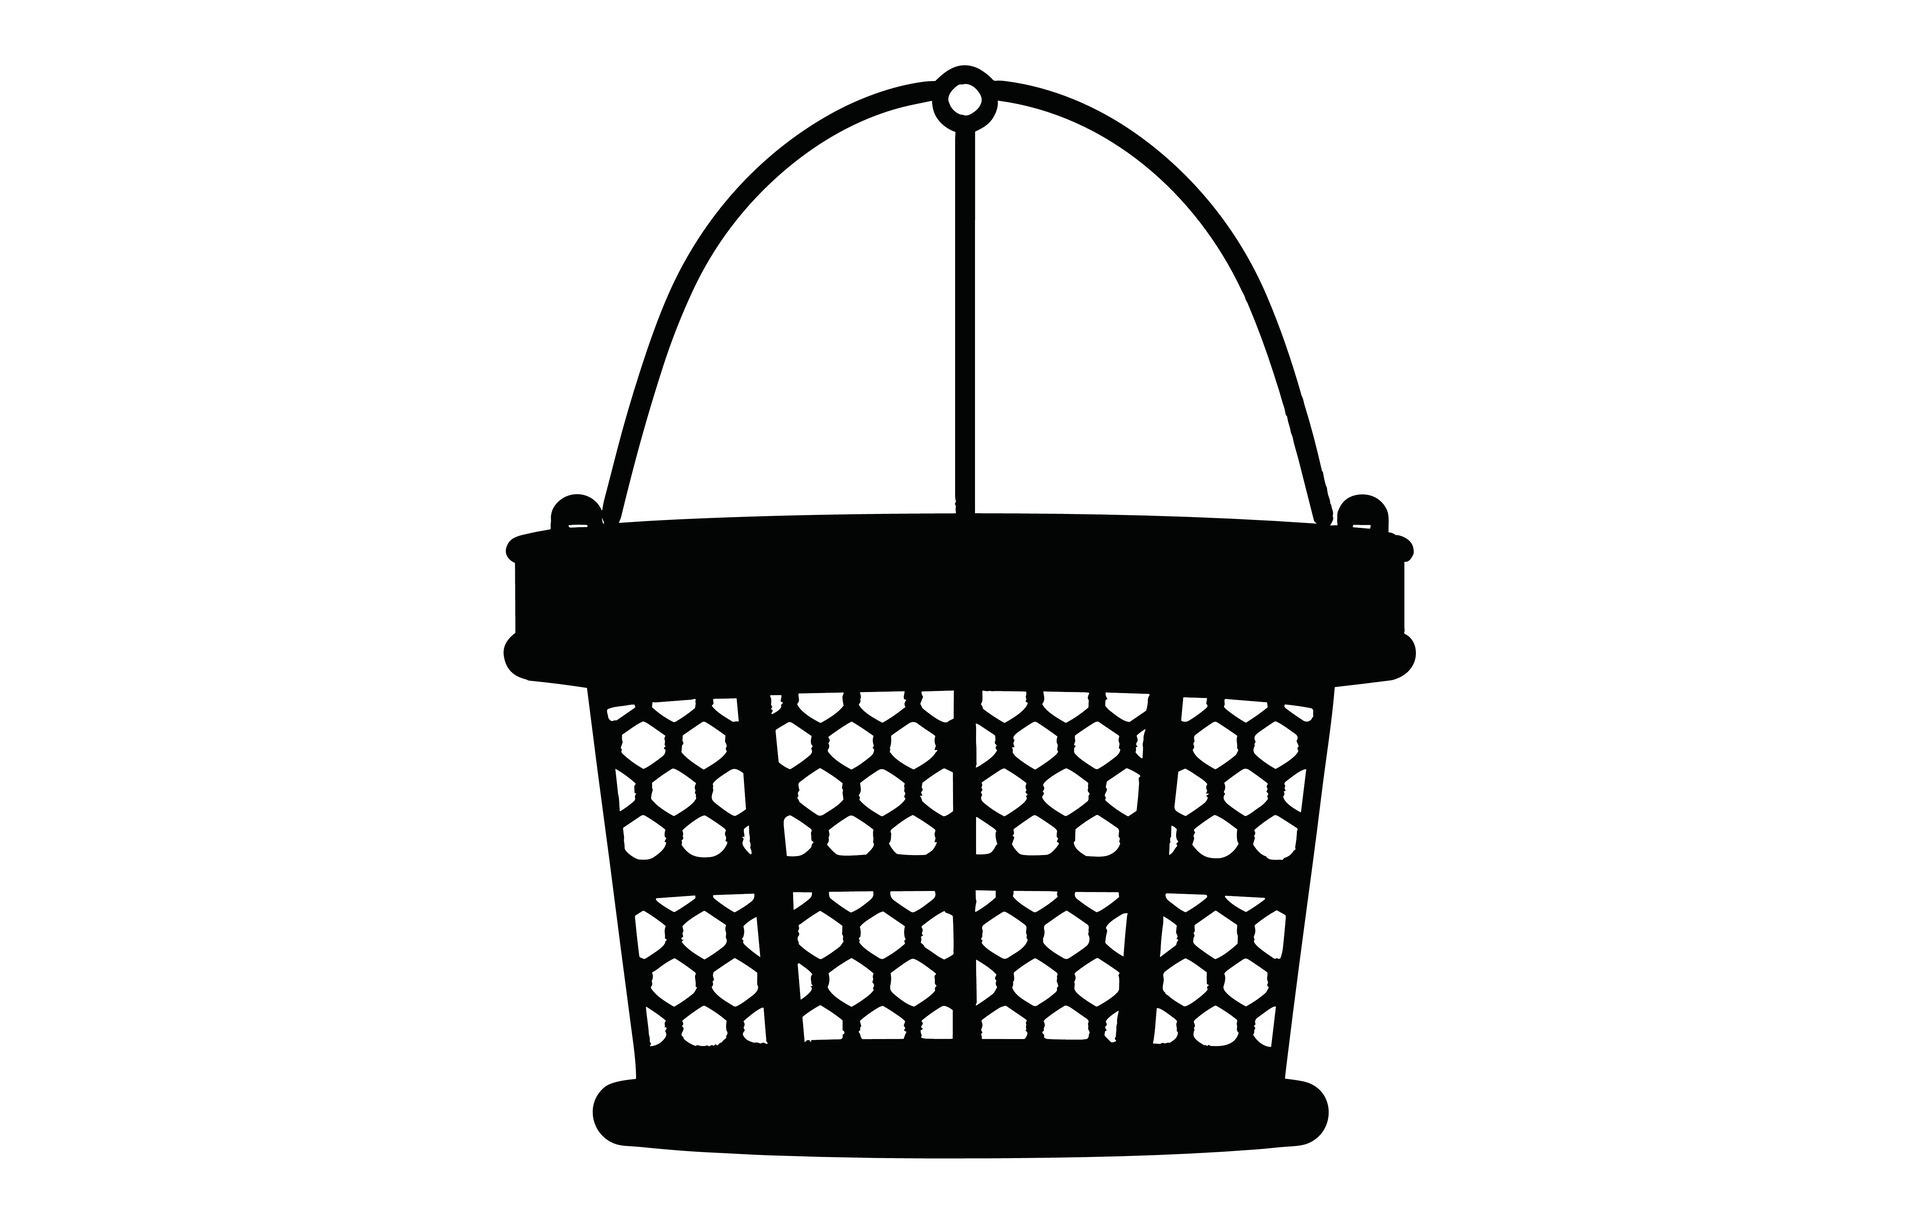 https://static.vecteezy.com/system/resources/previews/026/516/027/original/fishing-basket-or-bag-wooden-fish-basket-made-by-hand-fisherman-s-basket-used-in-fly-fishing-vintage-engraved-illustration-vector.jpg